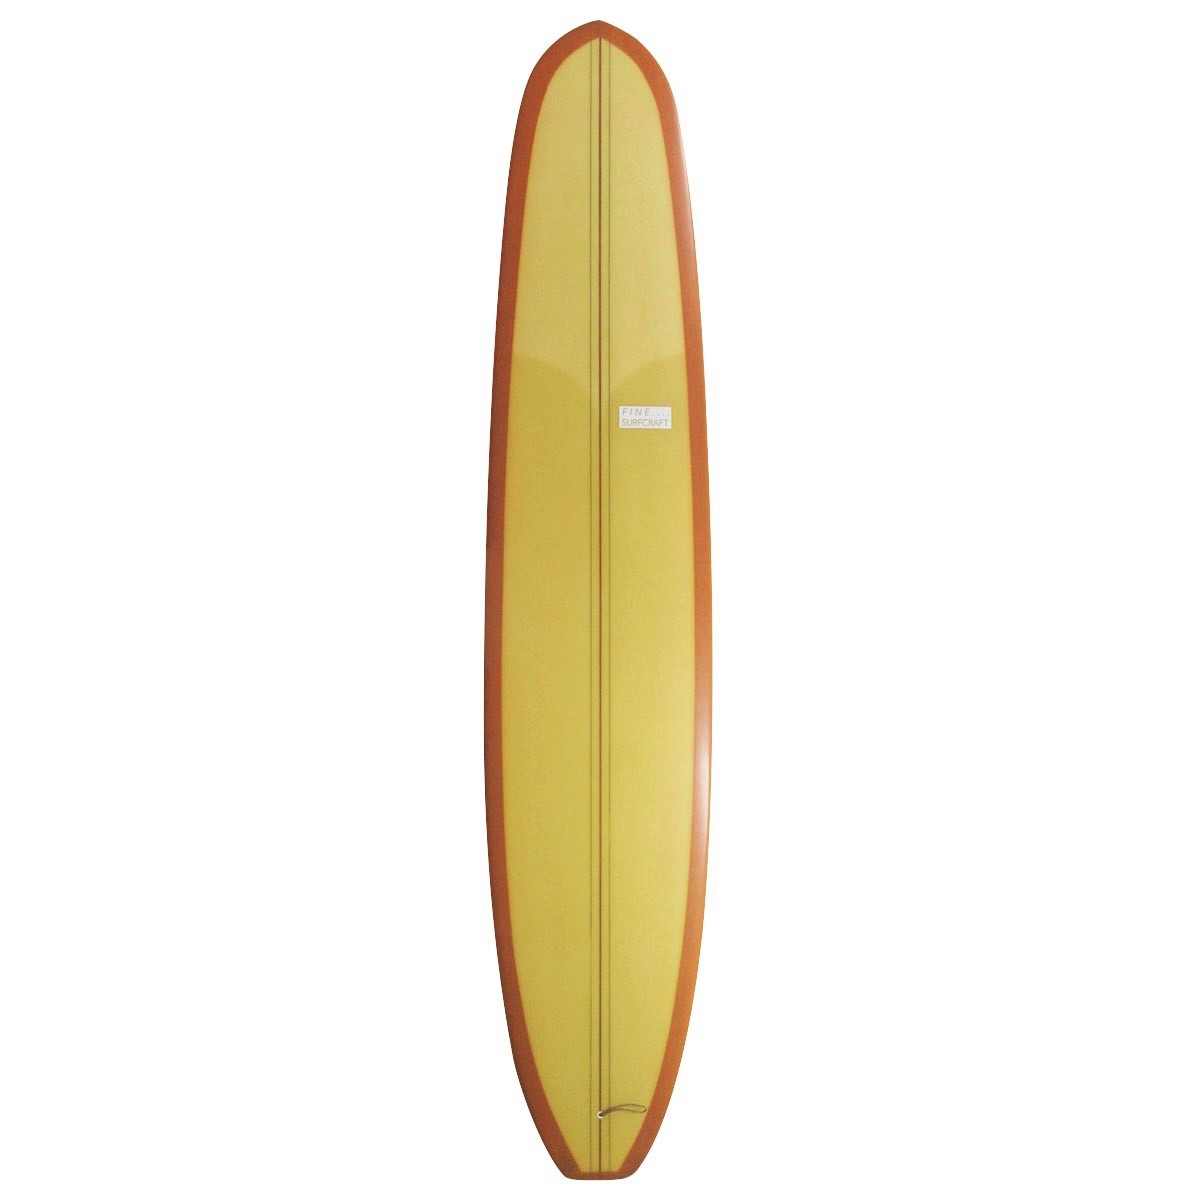 FINE SURFCRAFT / Fine Surfcraft / Pilsner 9`4 Shaped by Andrew Warhurst